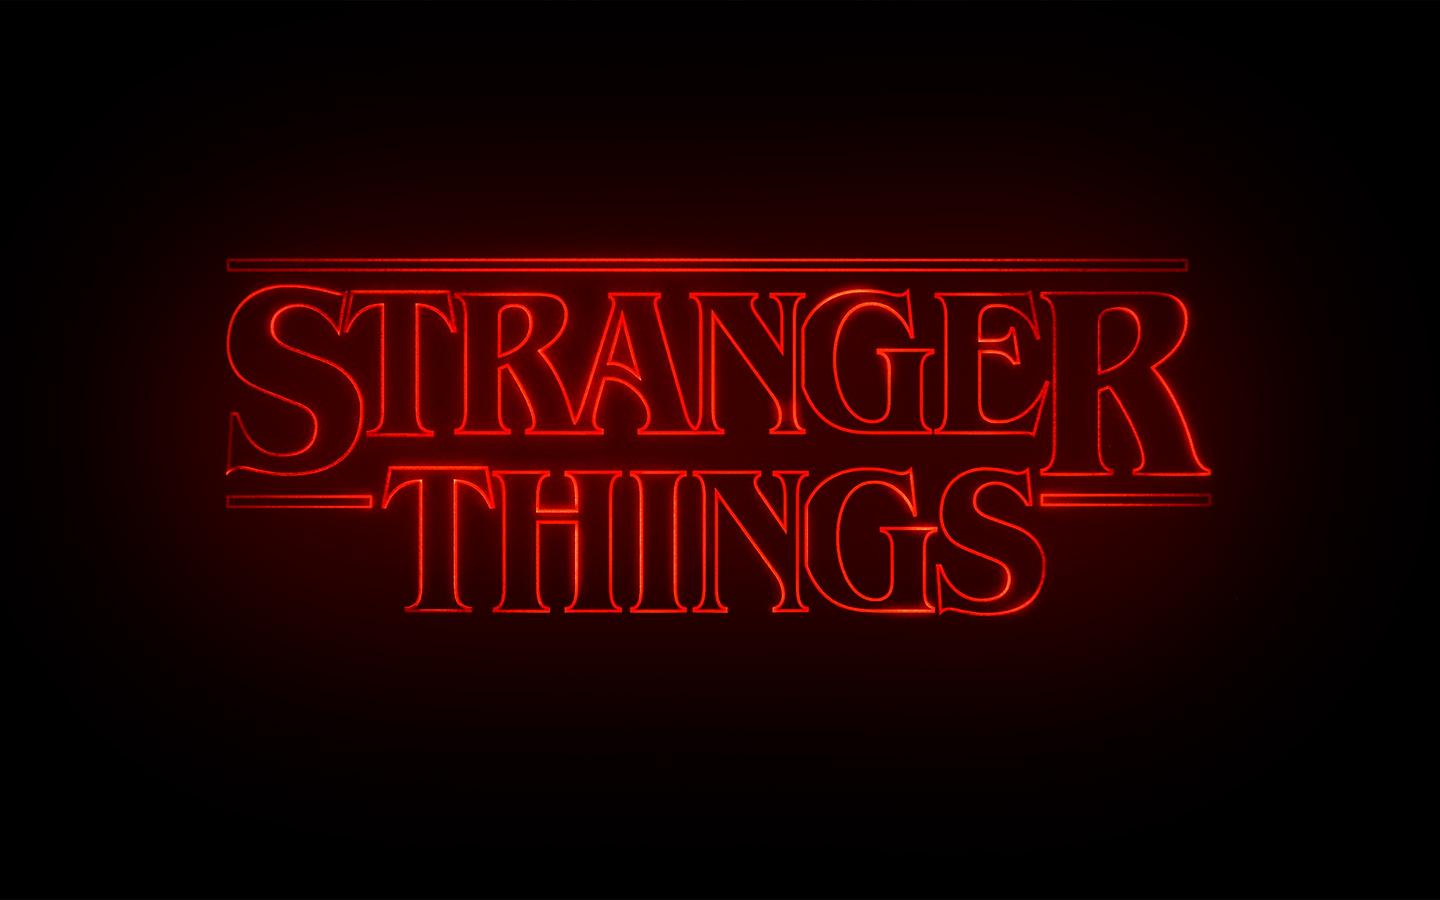 Stranger things logo